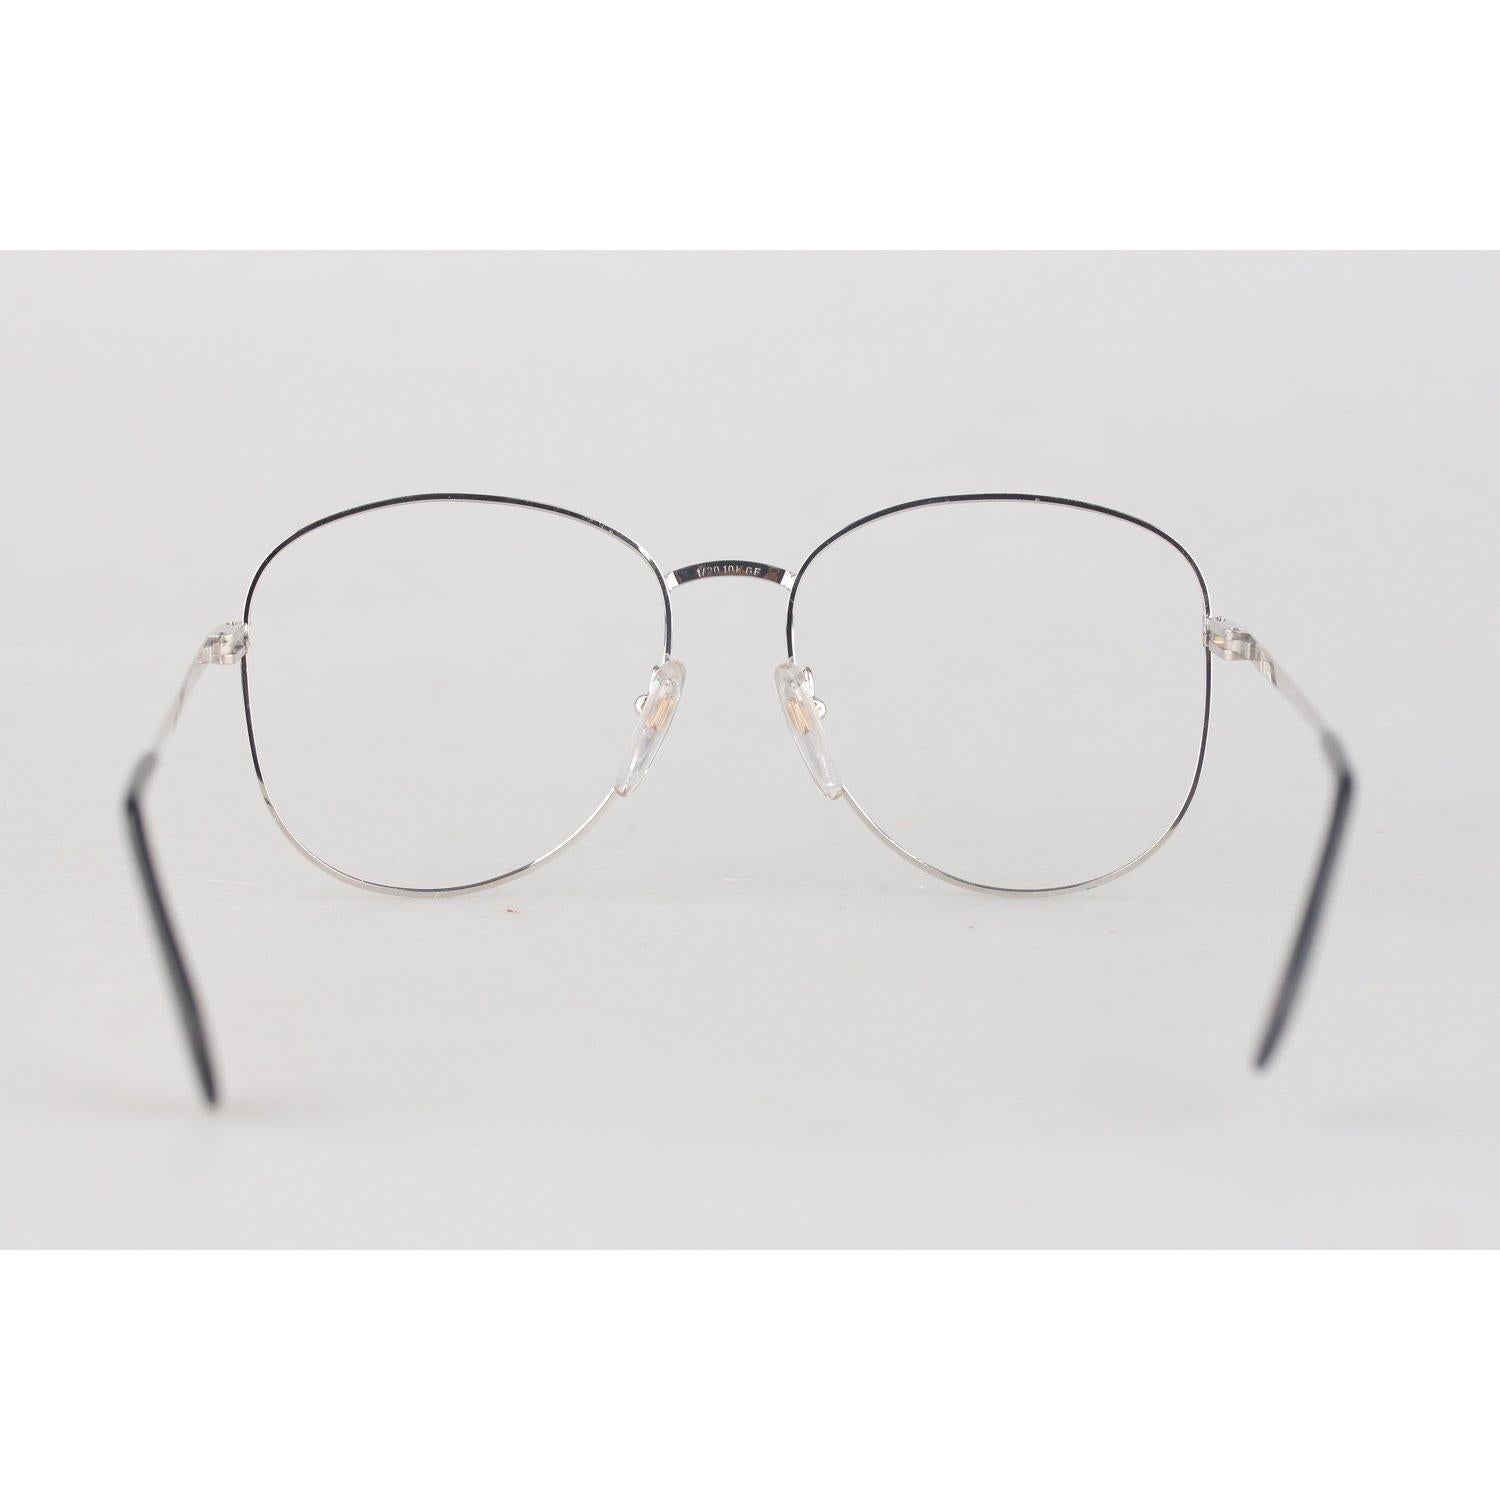 Vogue D'Or by Bausch & Lomb 10K GF White Gold Mint Eyeglasses Mod 512 1